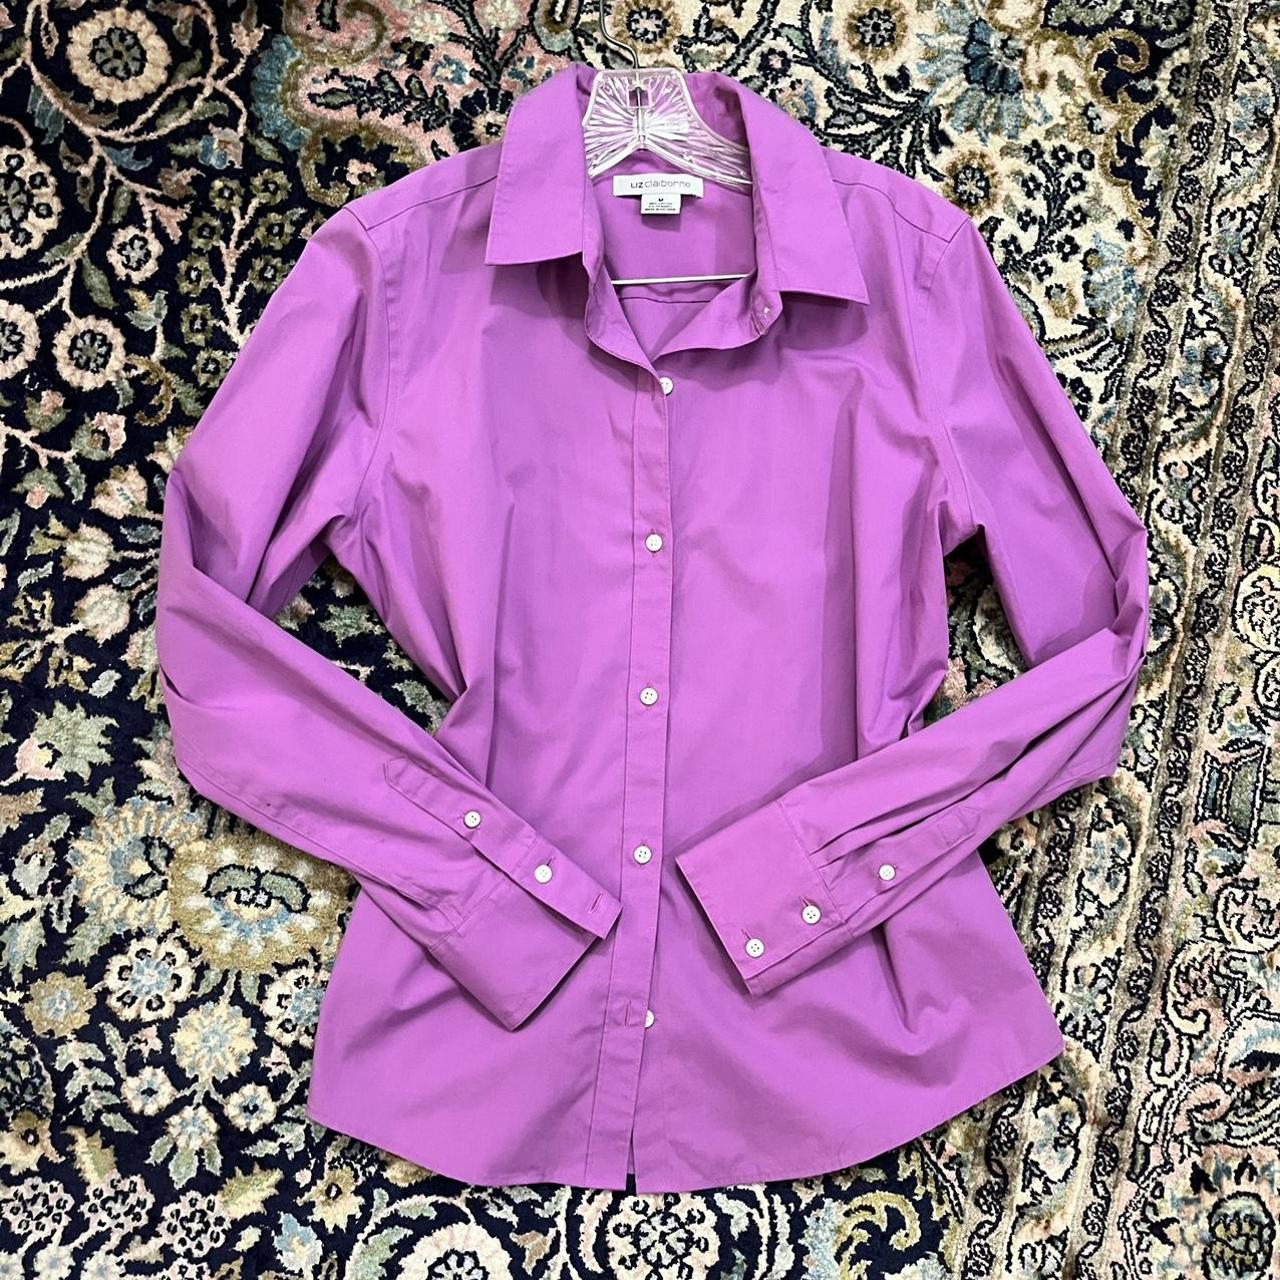 Liz Claiborne Women's Purple and Pink Blouse (3)